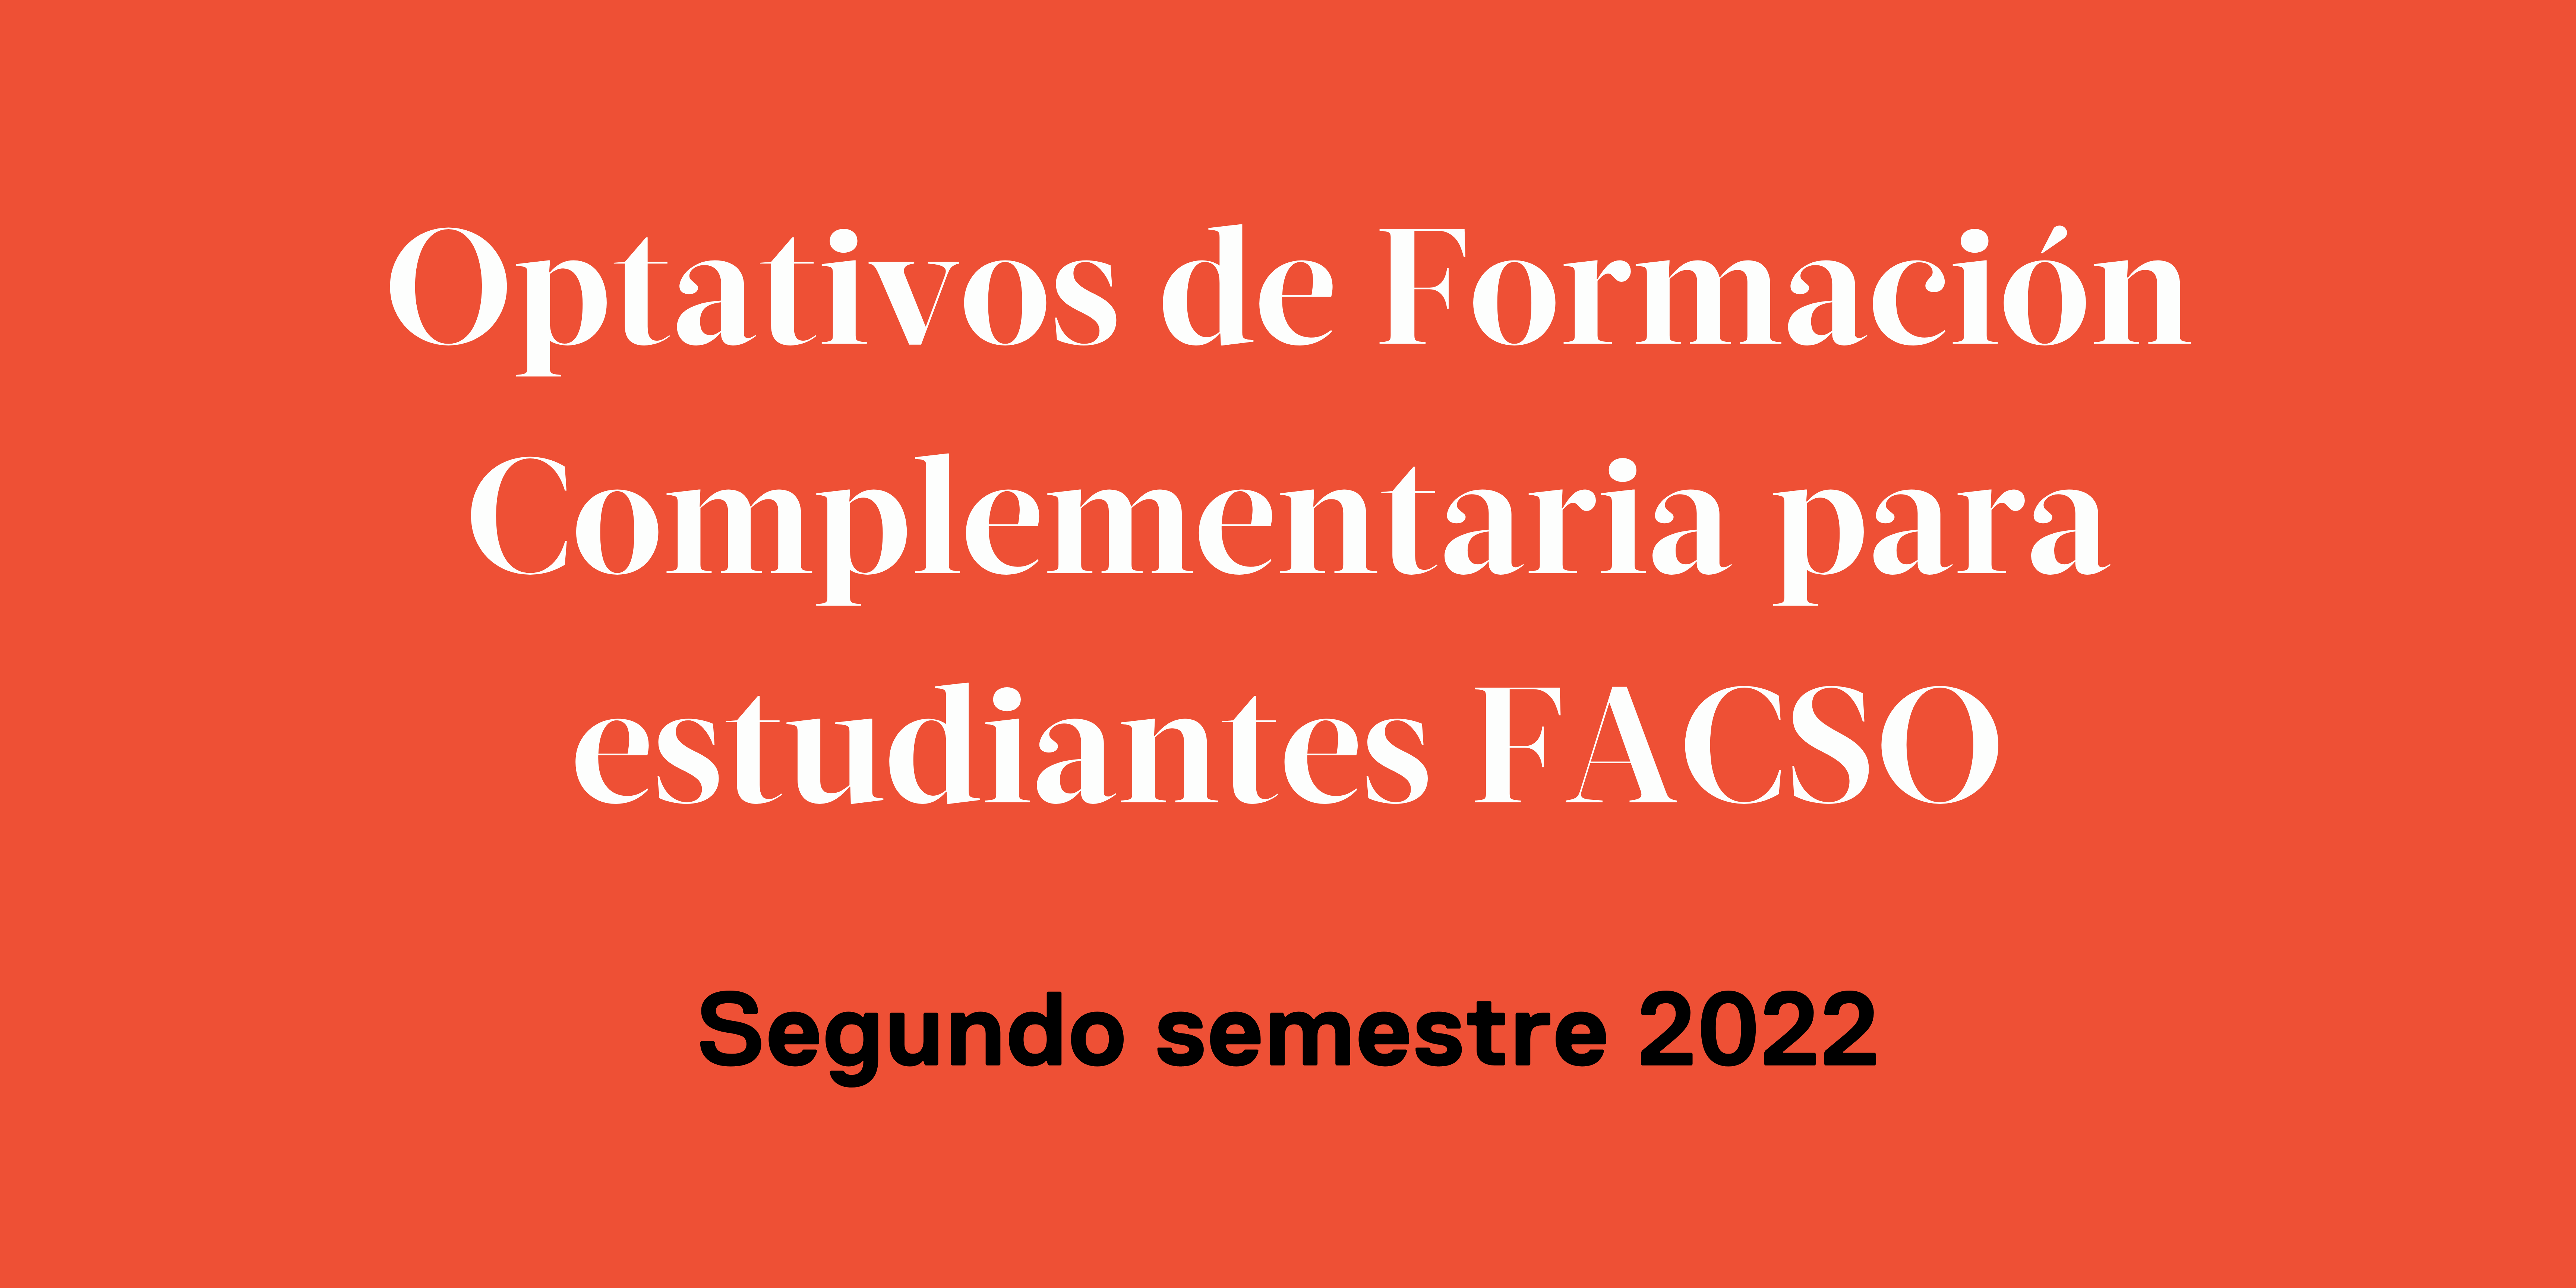 Catálogo de cursos OFC compartidos para estudiantes de FACSO | Segundo semestre 2022